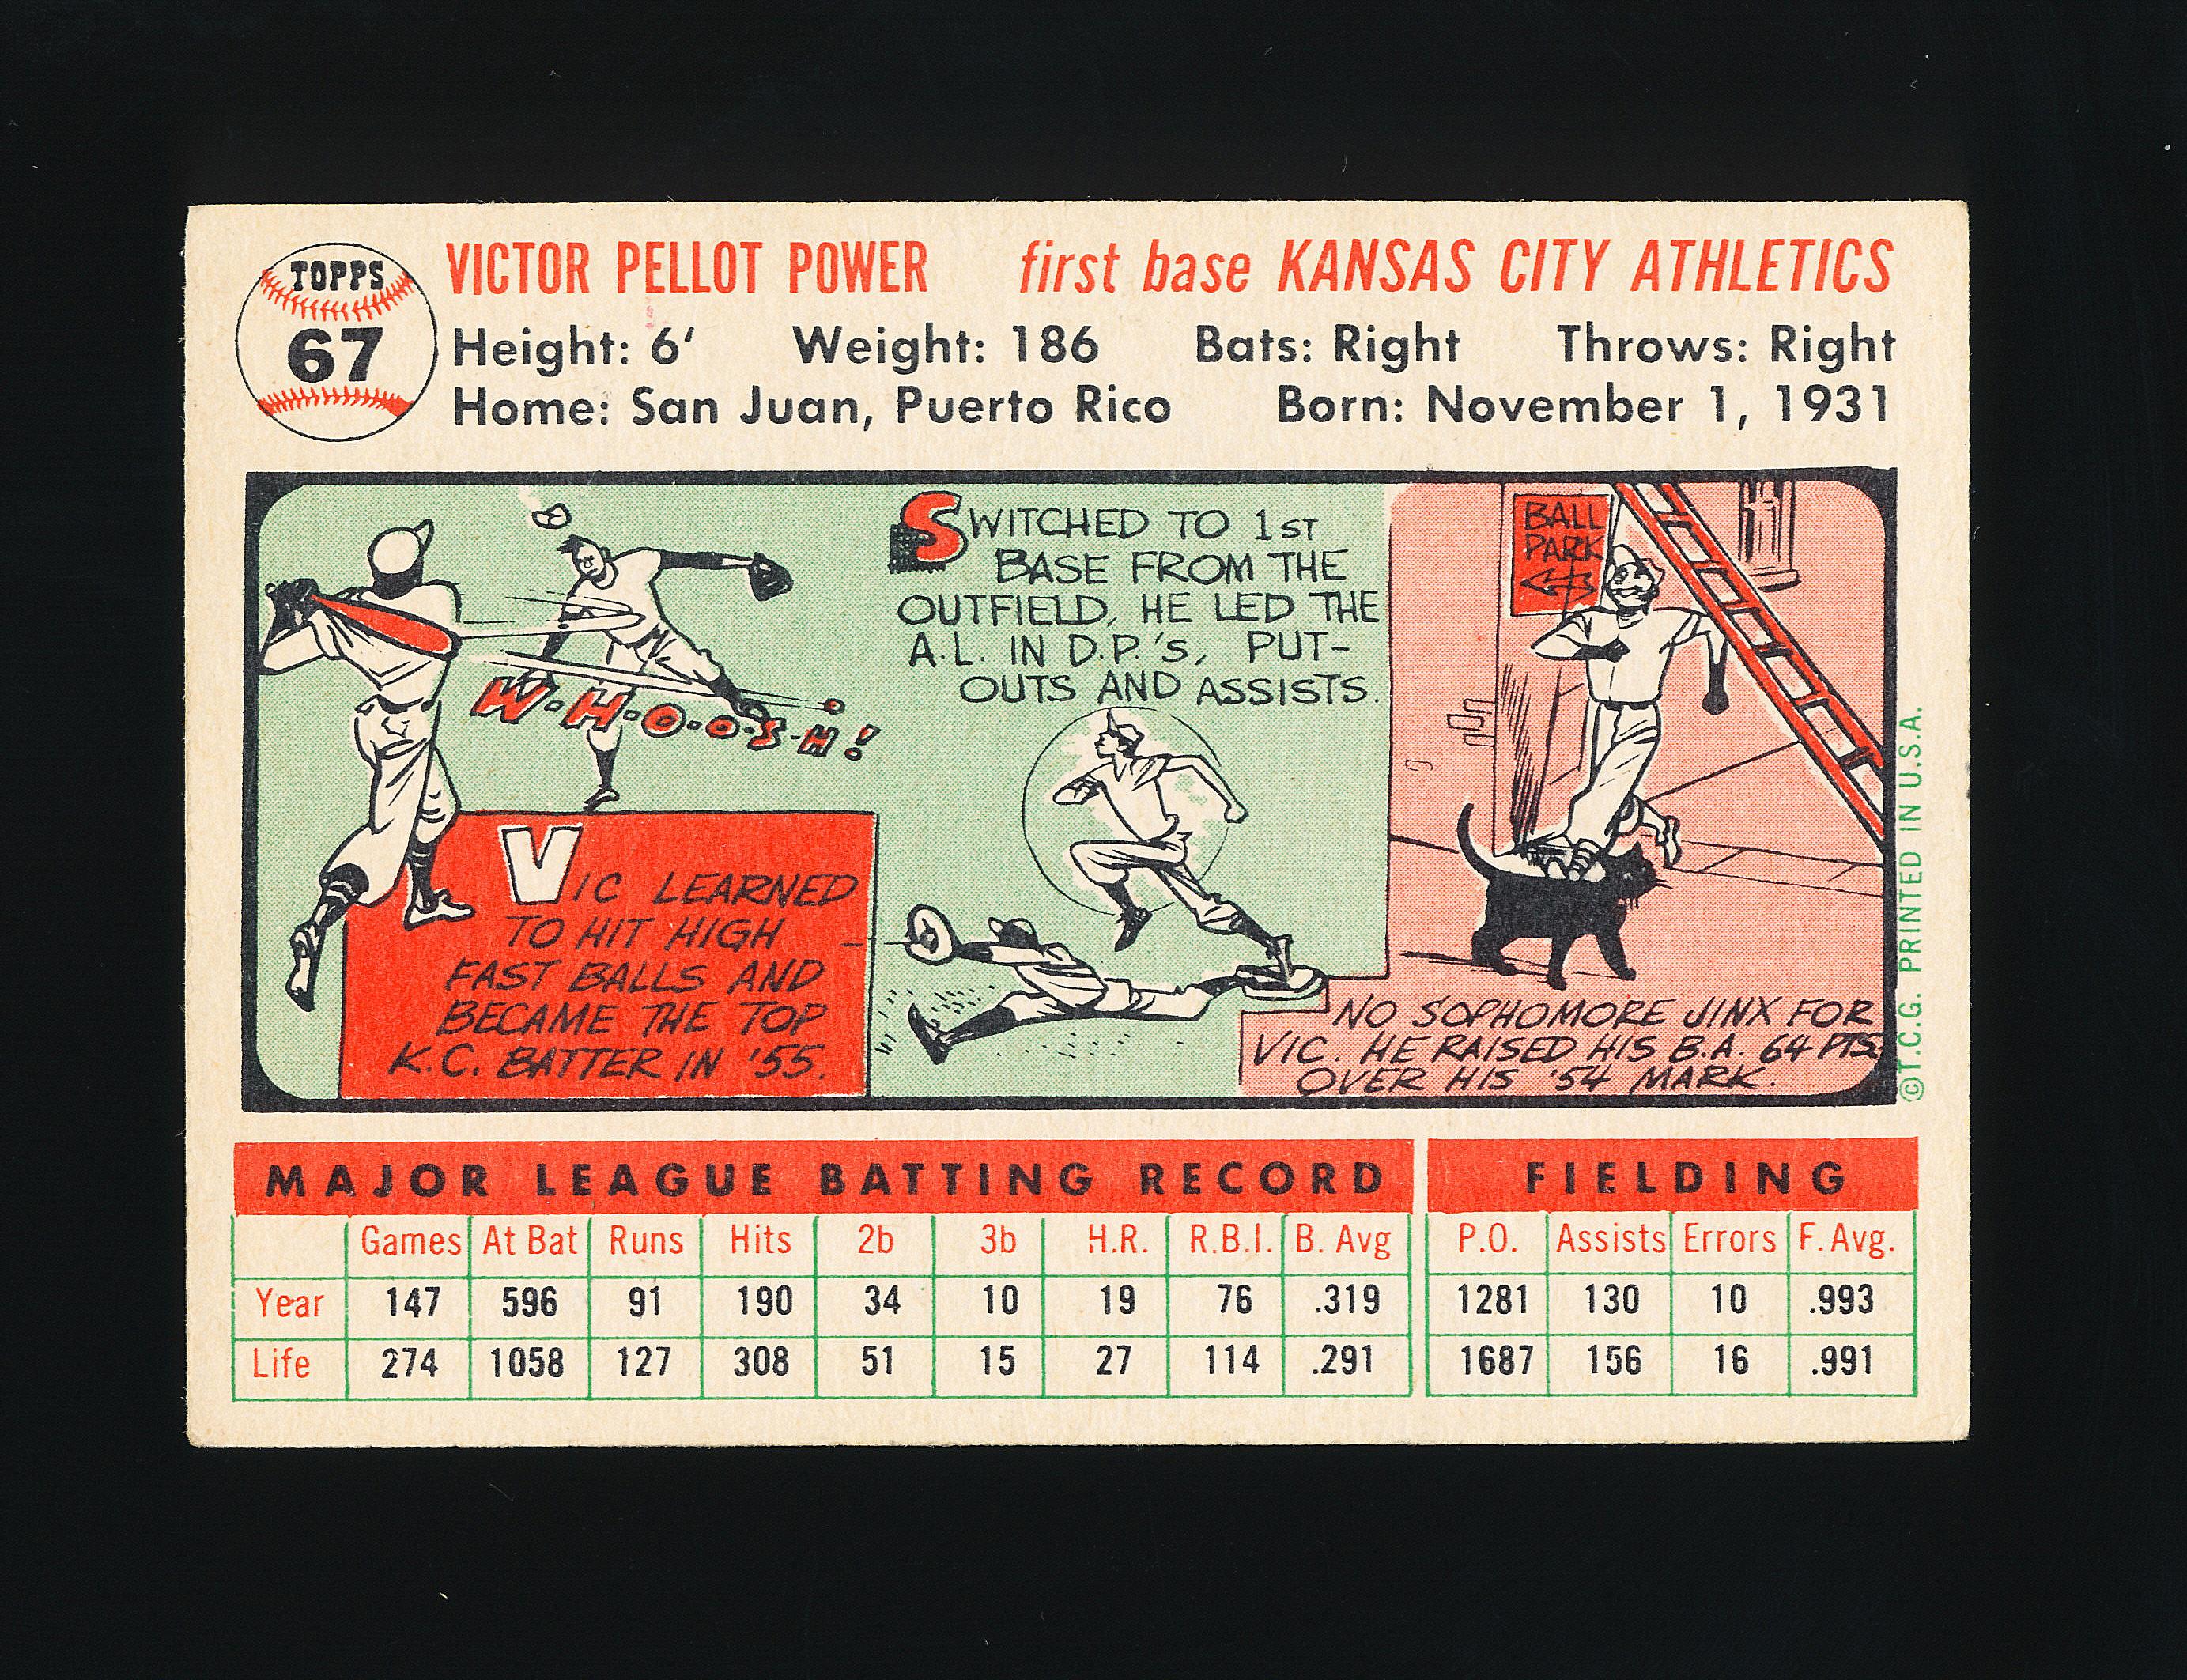 1956 Topps Baseball Card #67 Vic Power Kansas City Athletics